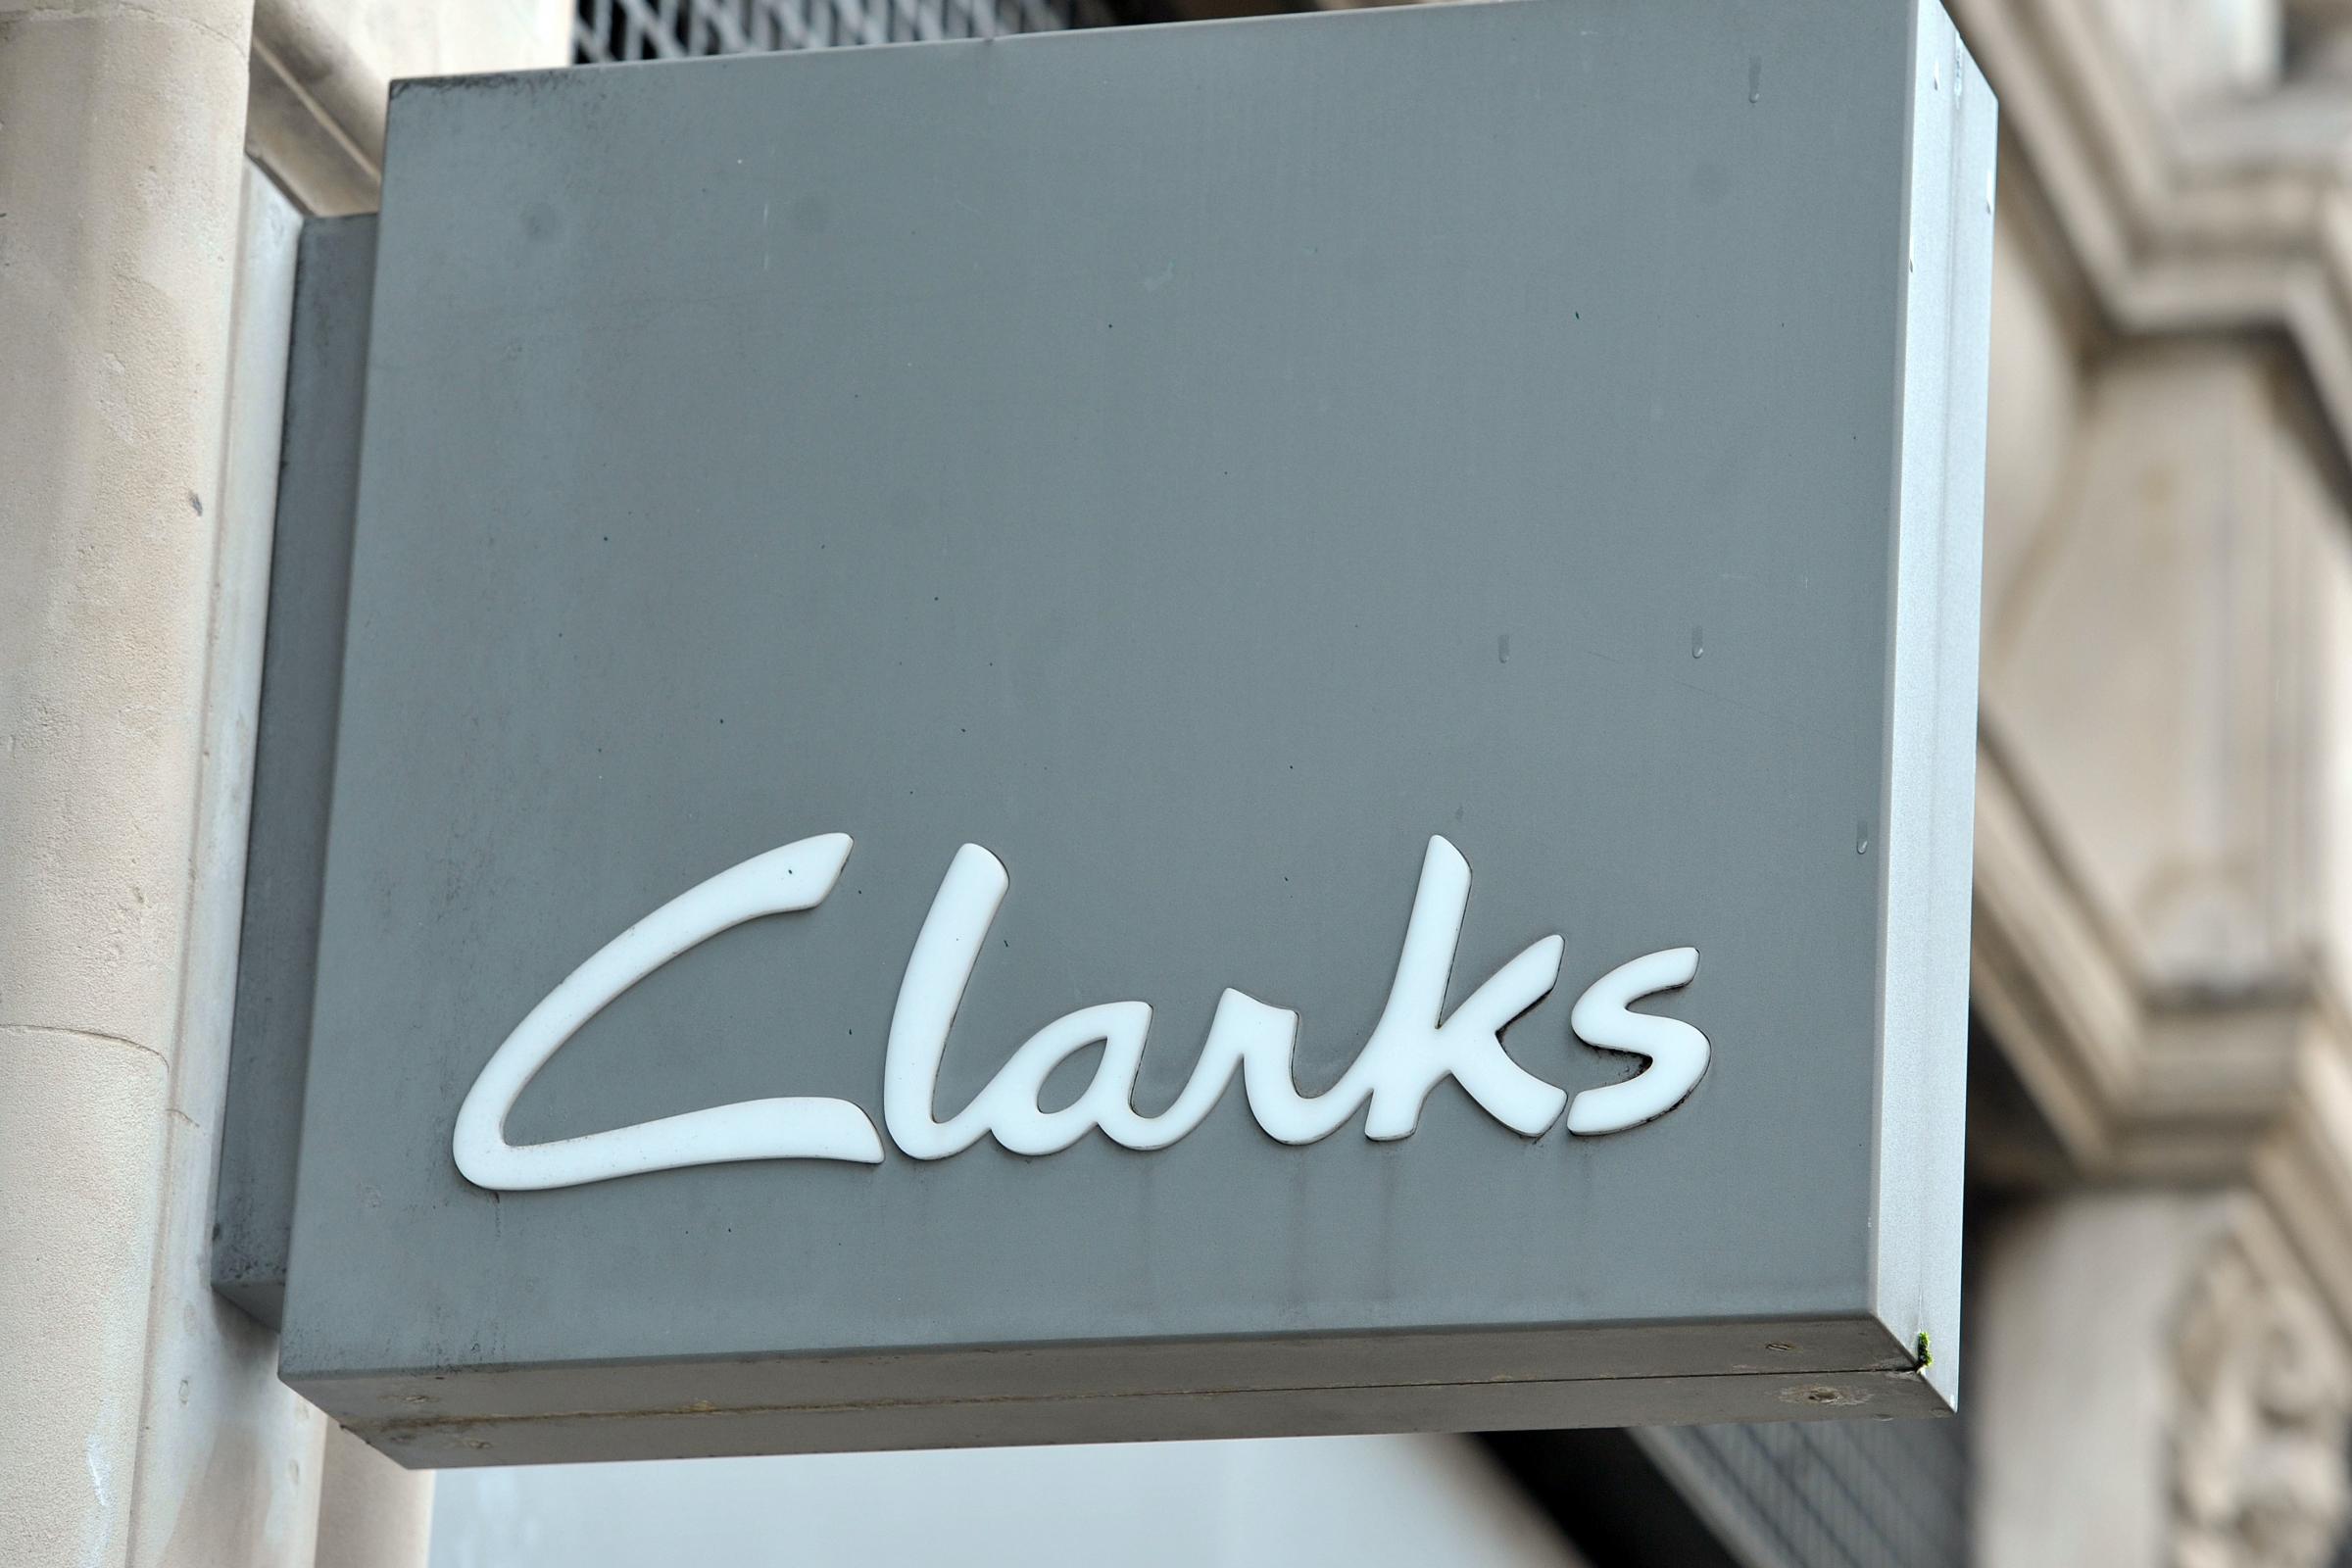 clarks wimbledon